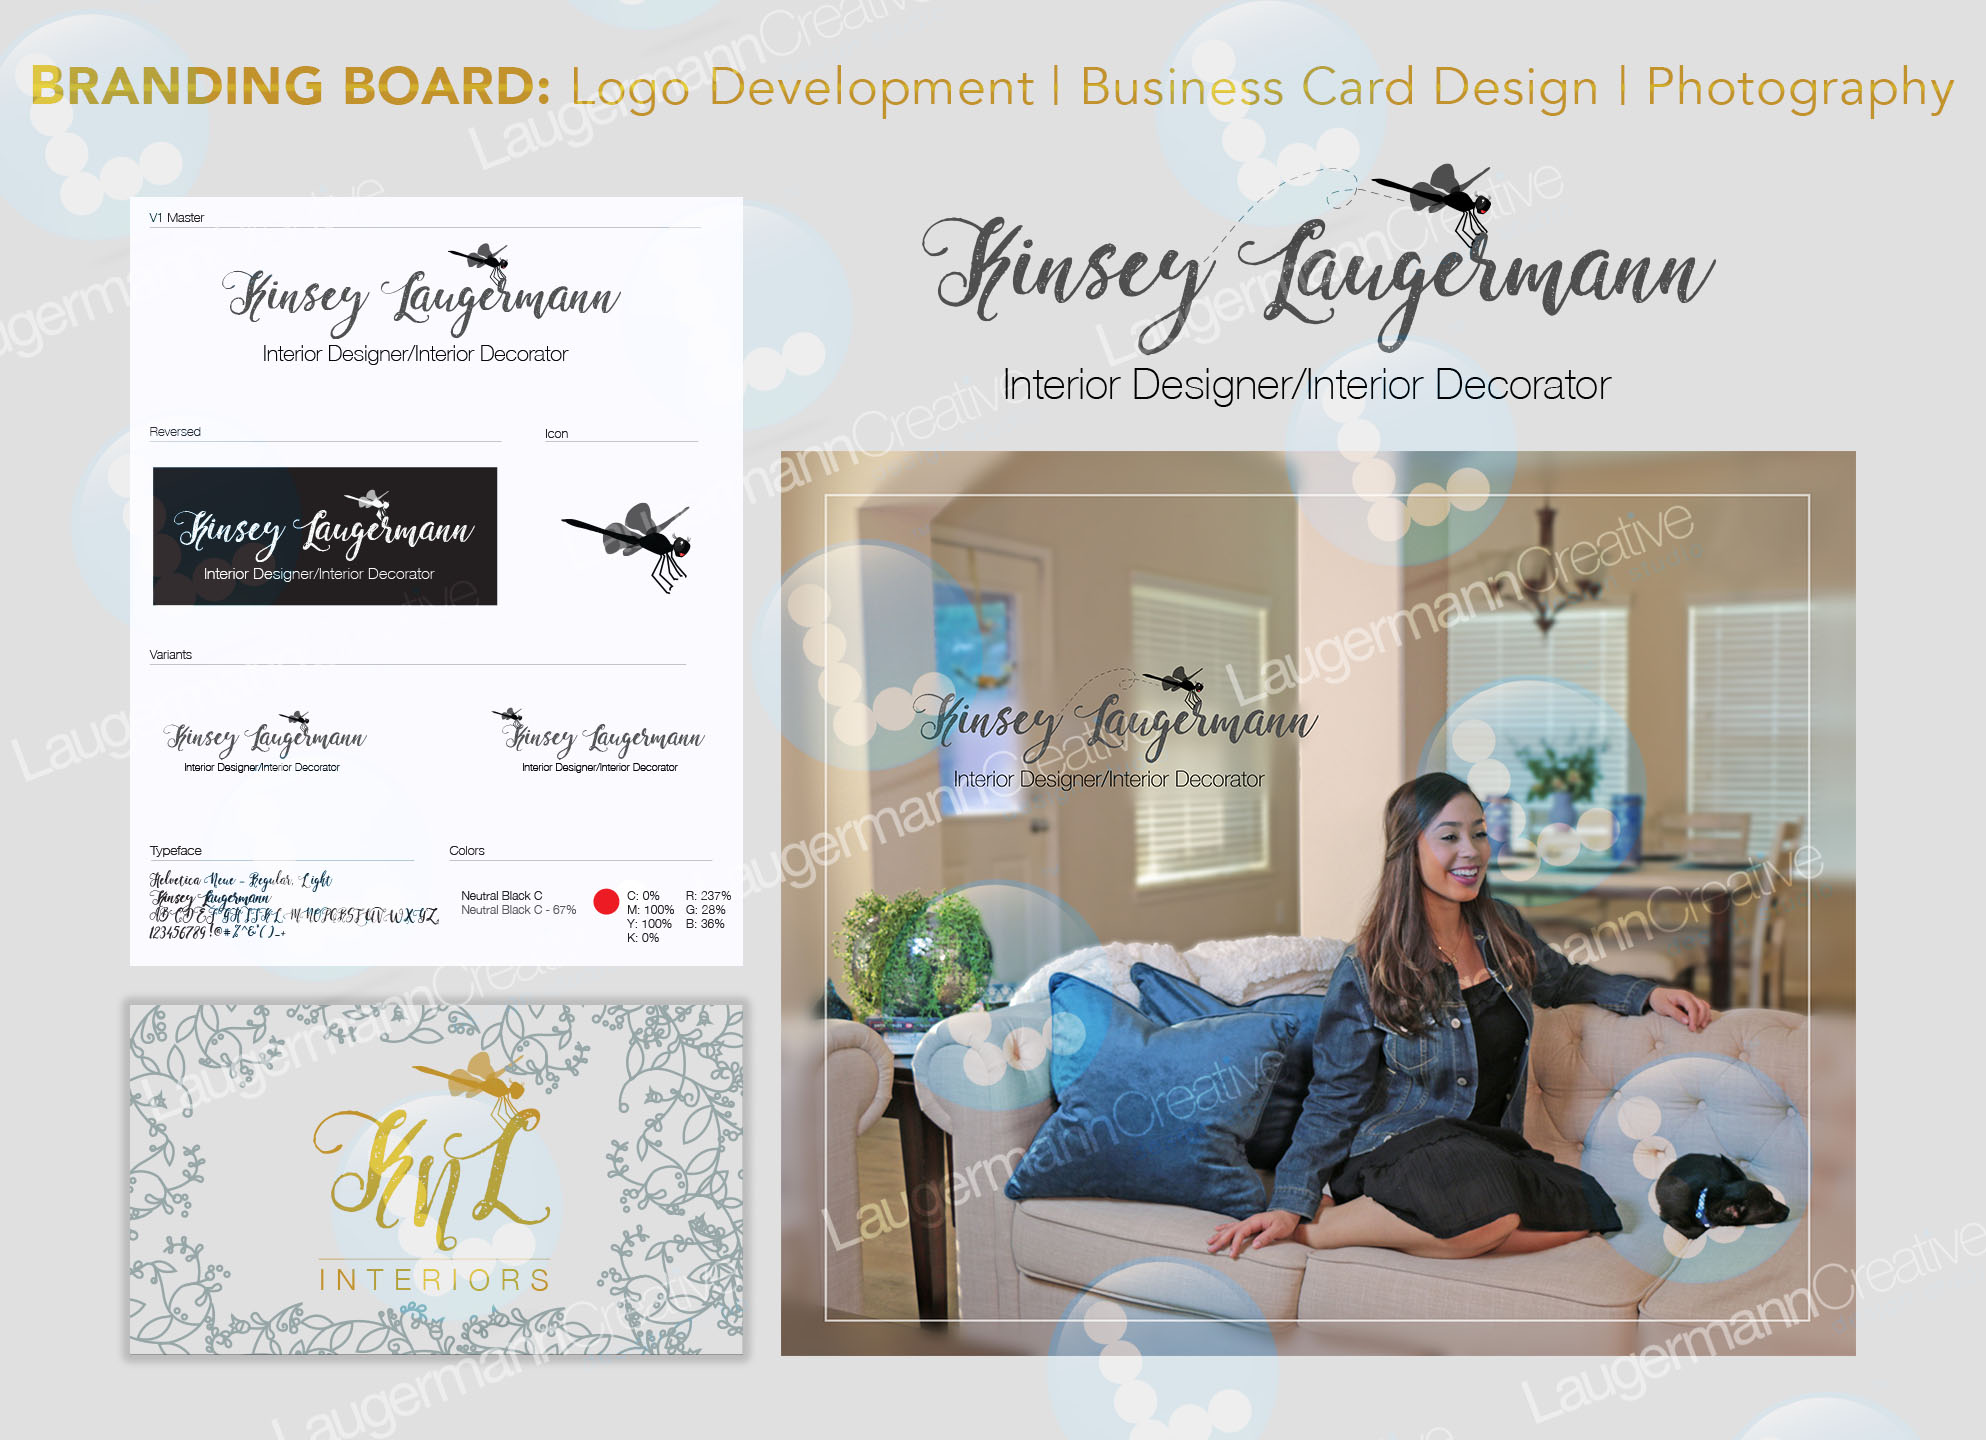 Branding Board: Logo, Photography, Business Card Design